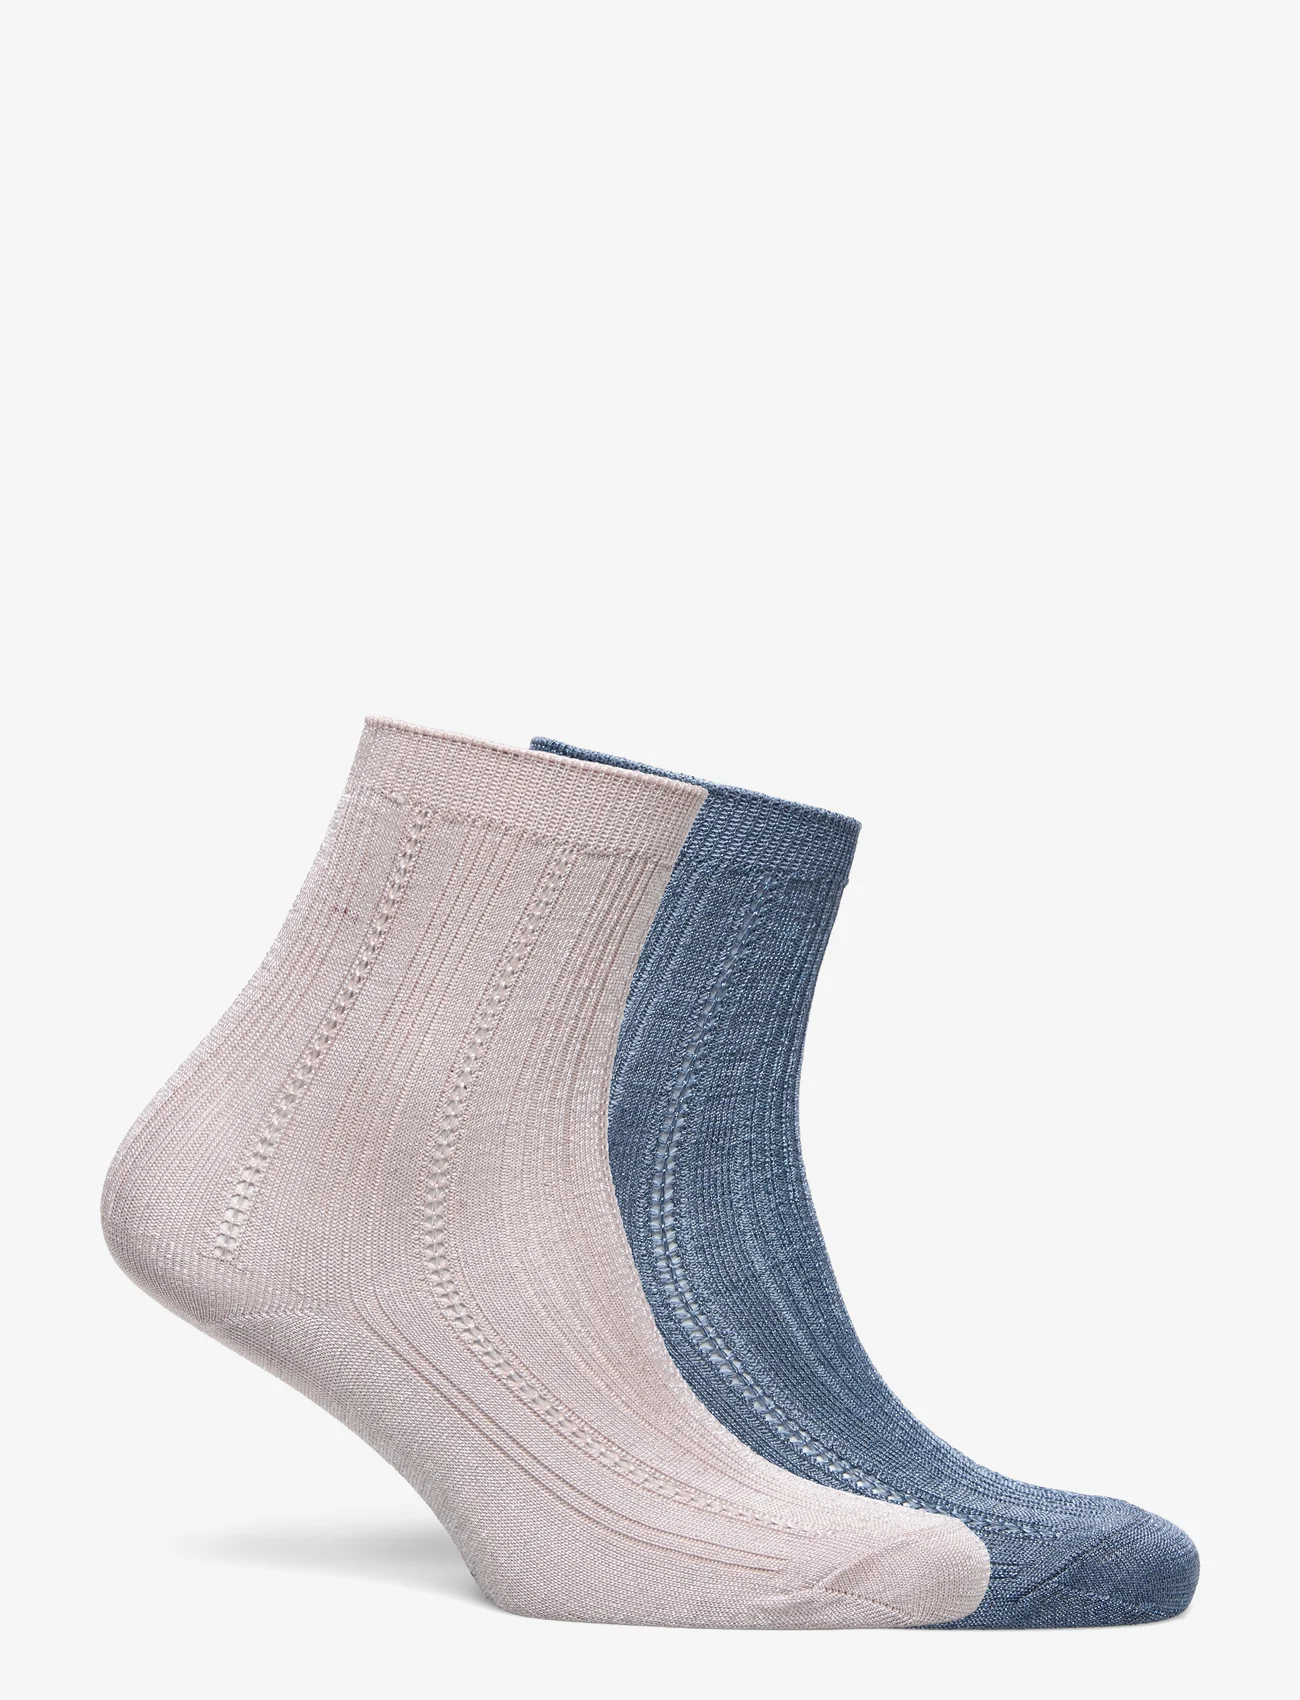 Becksöndergaard - Glitter Drake Sock 2 Pack - madalaimad hinnad - blue/fawn - 1